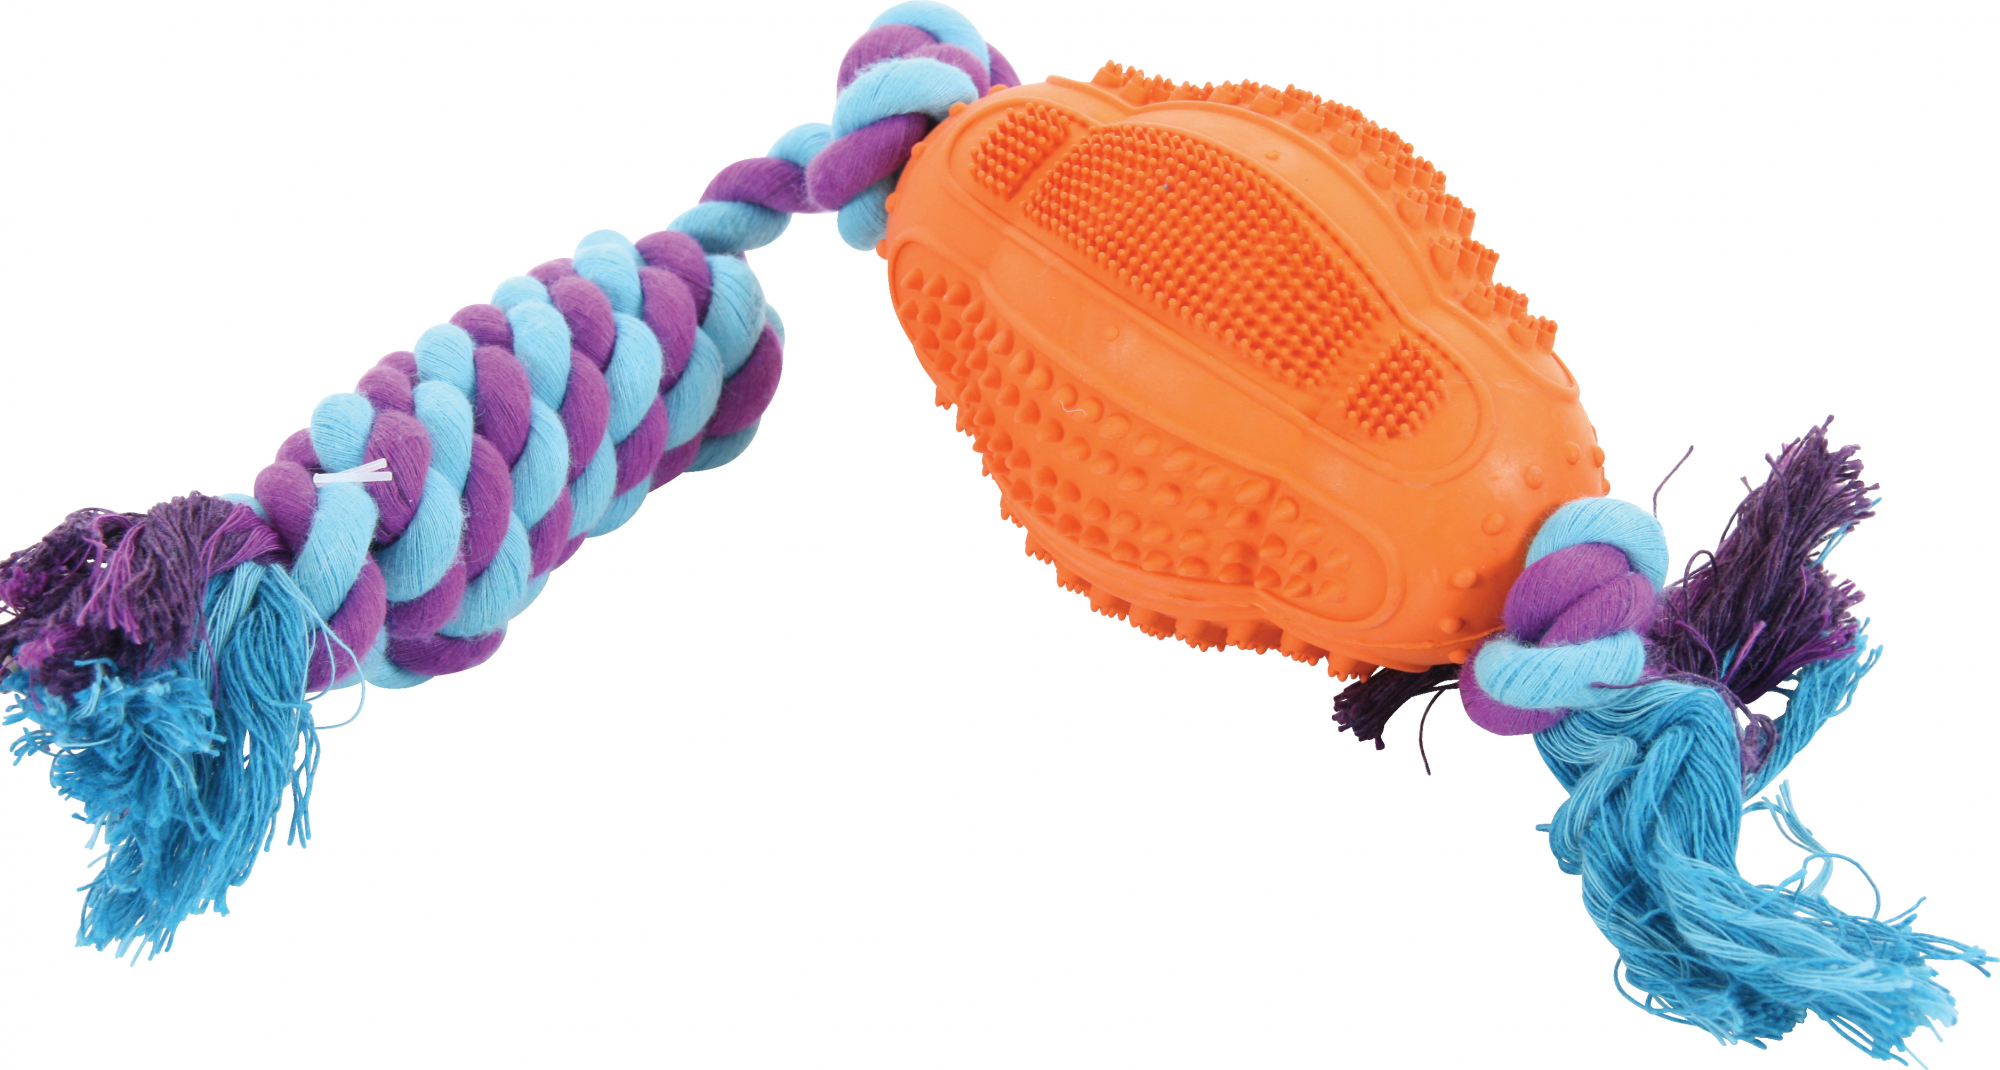 Hundespielzeug Seil mit Gummi-Dentalball